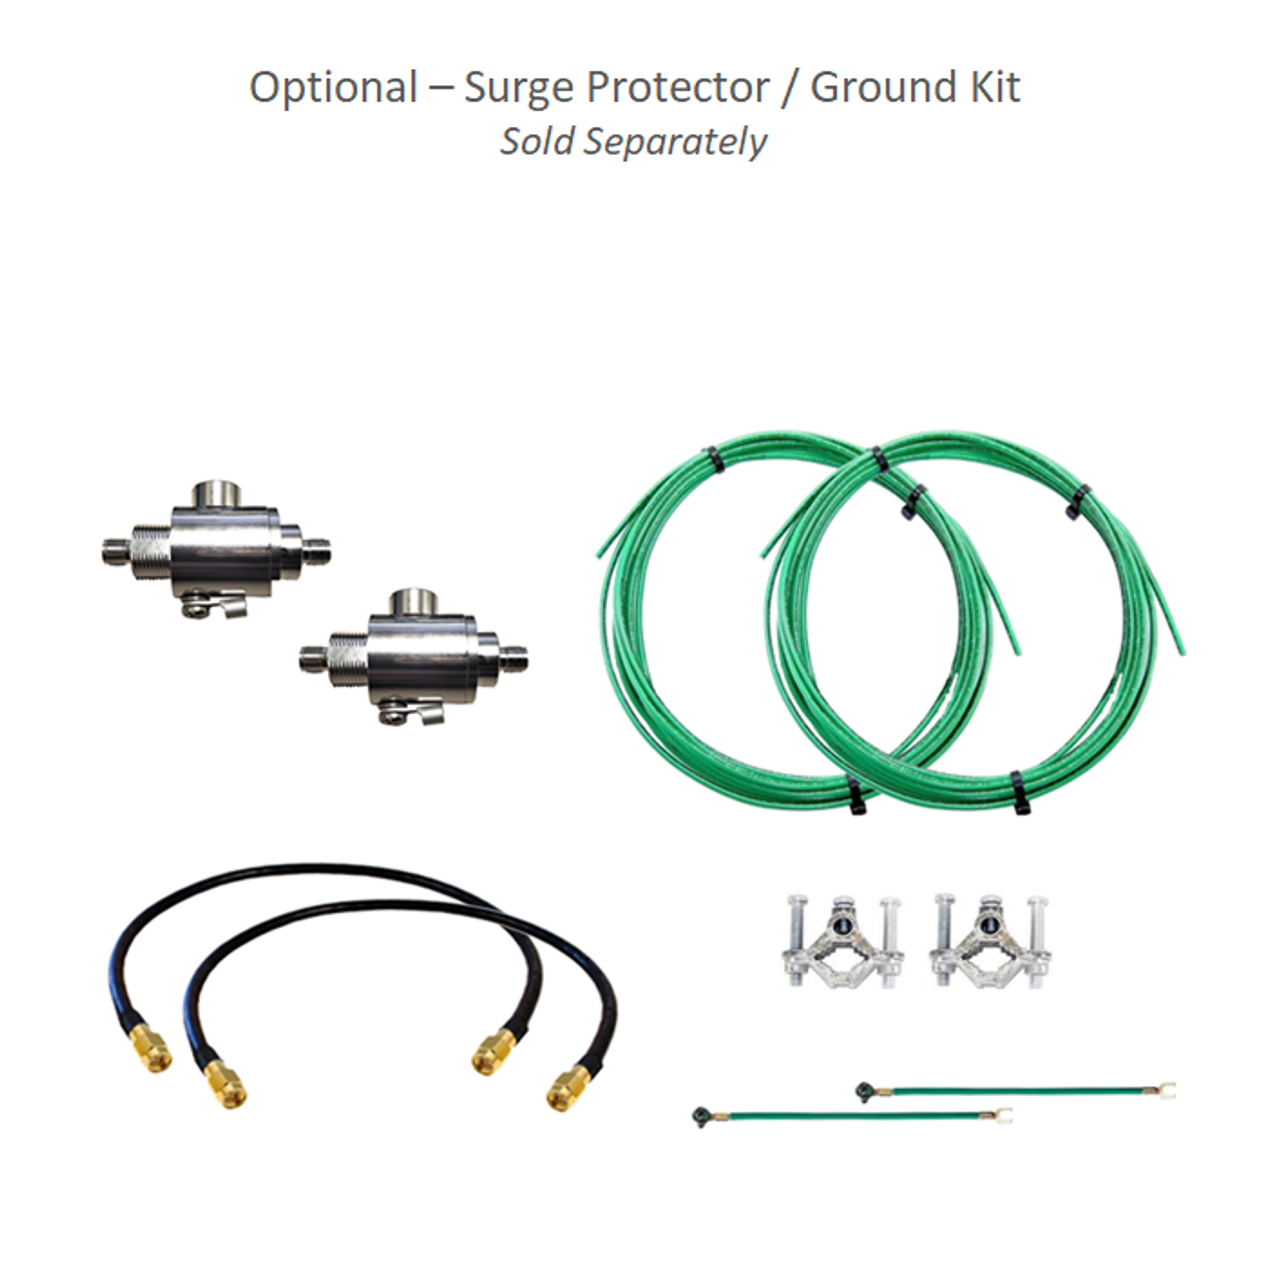 Optional - Lightning Surge Protector / Ground Kit